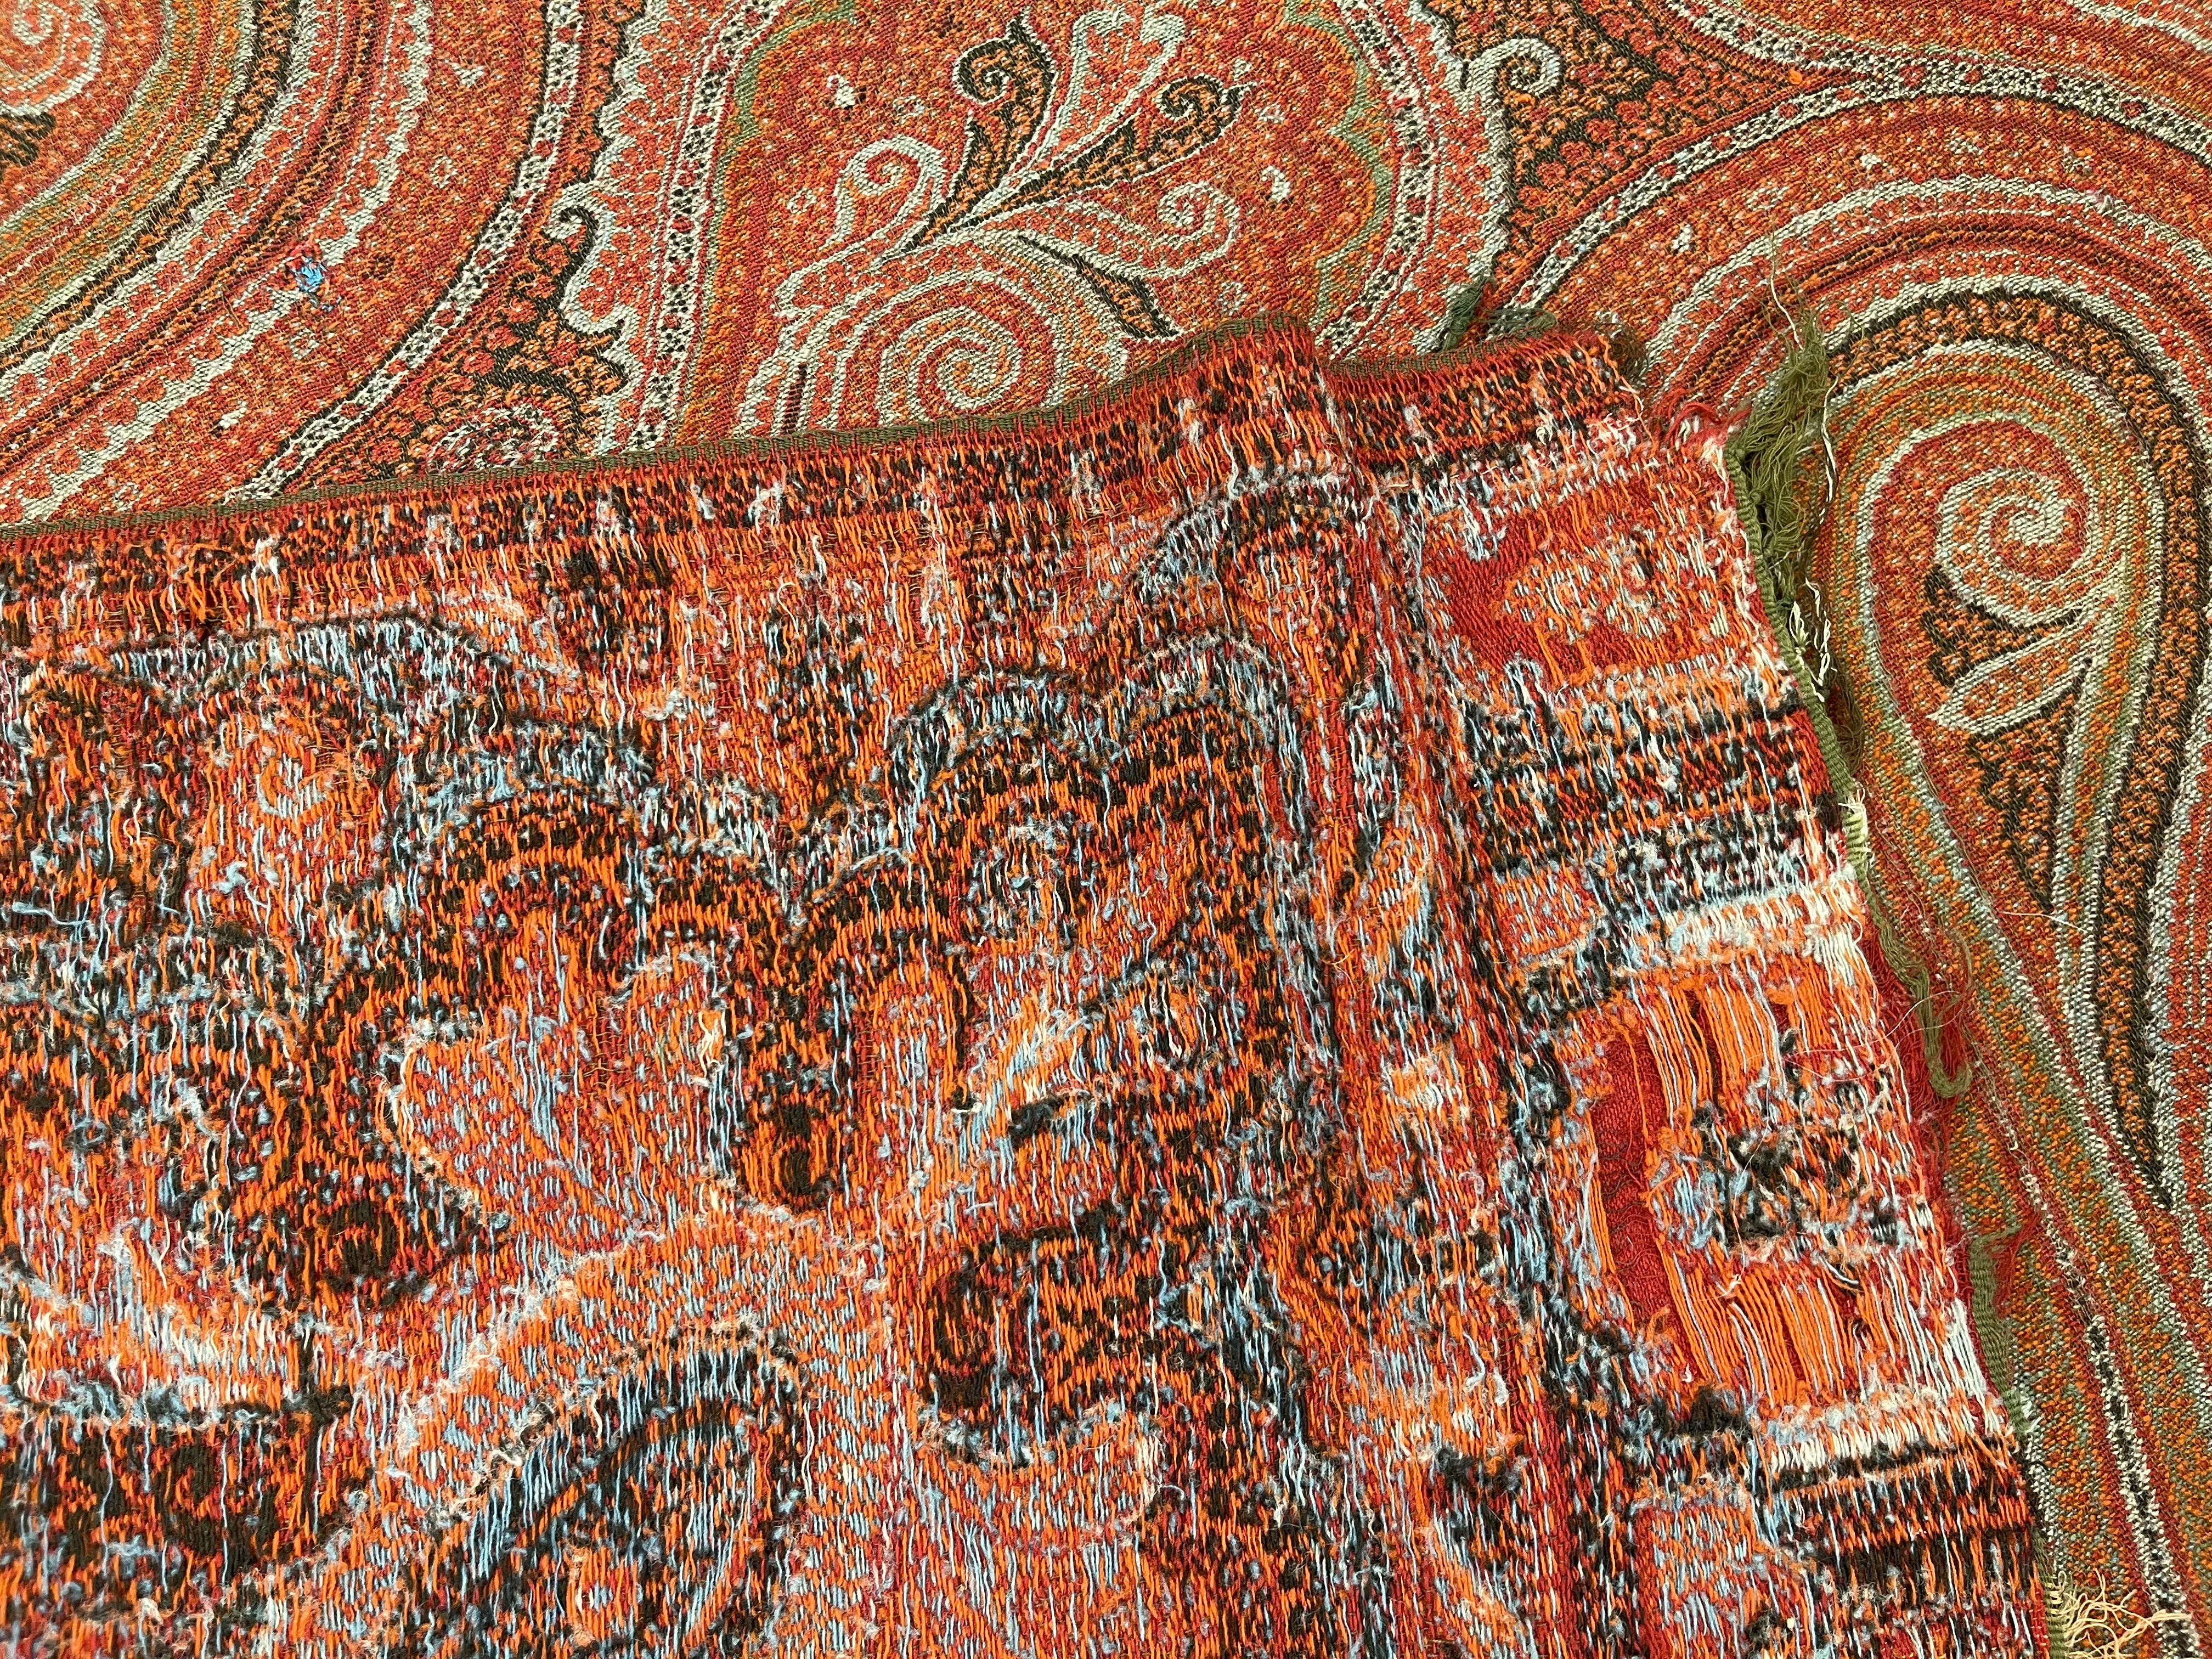 Antique paisley shawl - # 57196